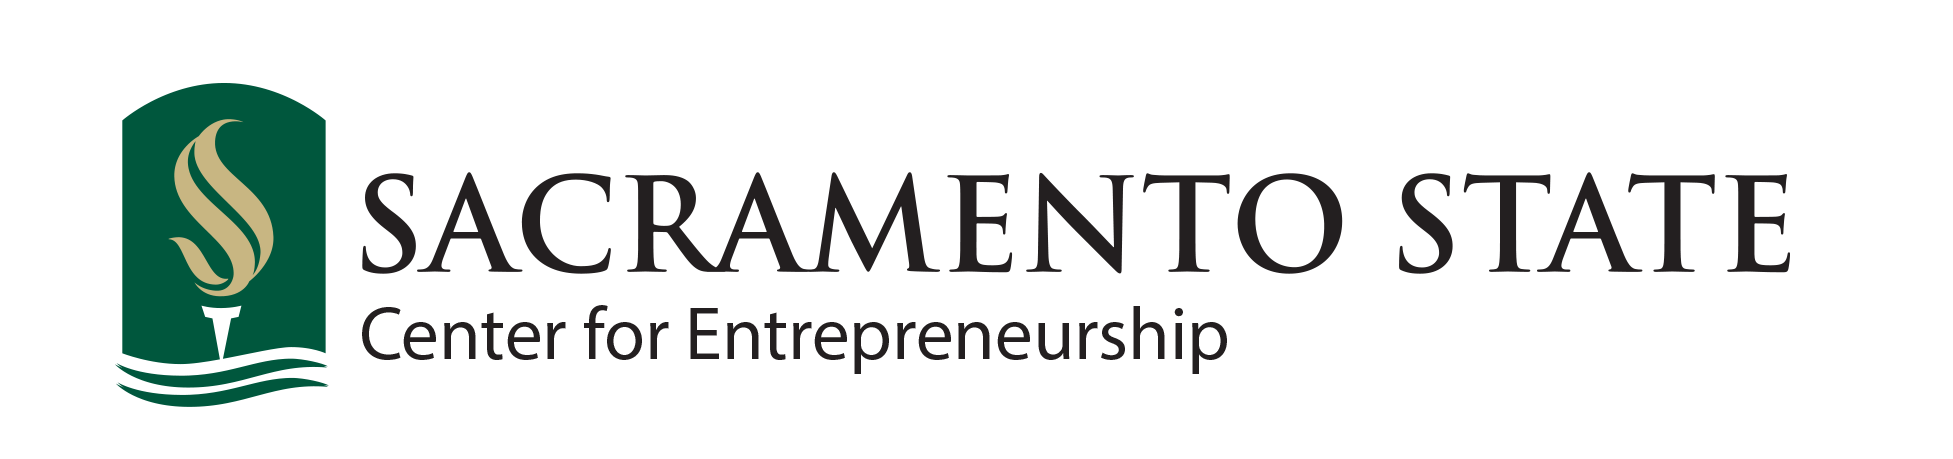 Sacramento State Center for Entrepreneurship